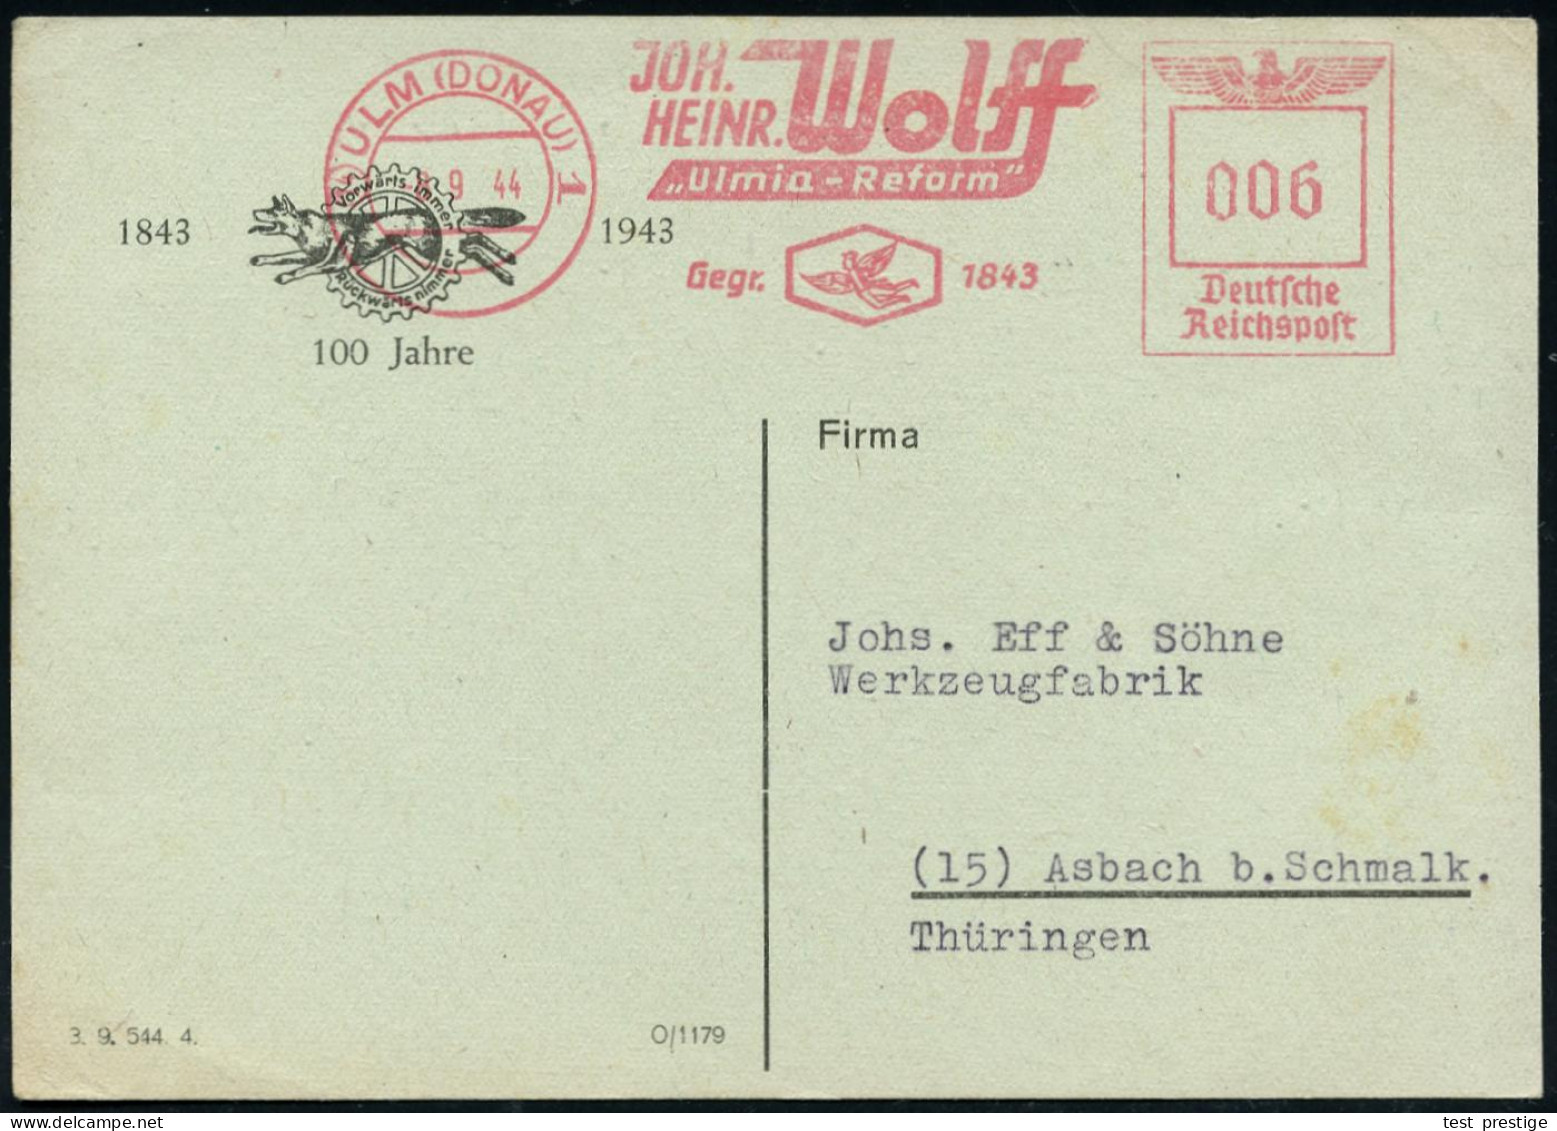 (14) ULM (DONAU) 1/ JOH./ HEINR. Wolff/ "Ulmer-Reform"/ Gegr.1843 1944 (8.9.) Seltener AFS Francotyp Mit Postleitzahl != - Other (Air)